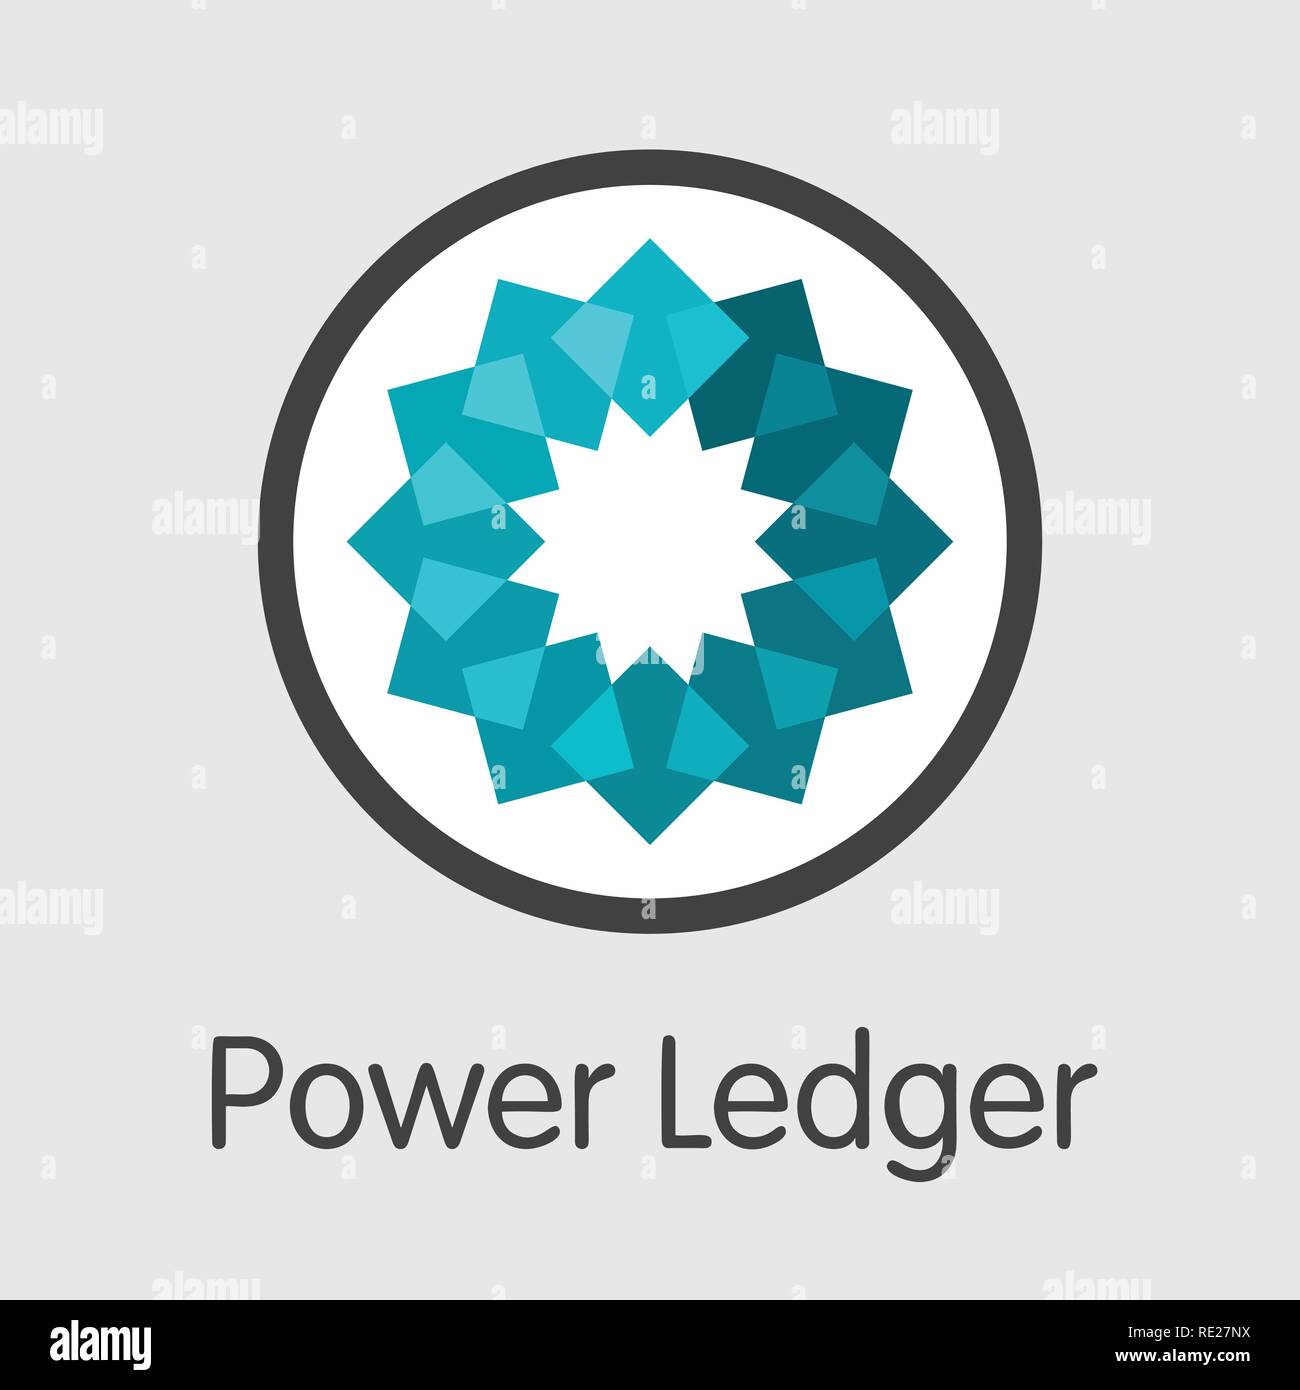 POWR - Power Ledger. The Logo of Money or Market Emblem. Stock Vector